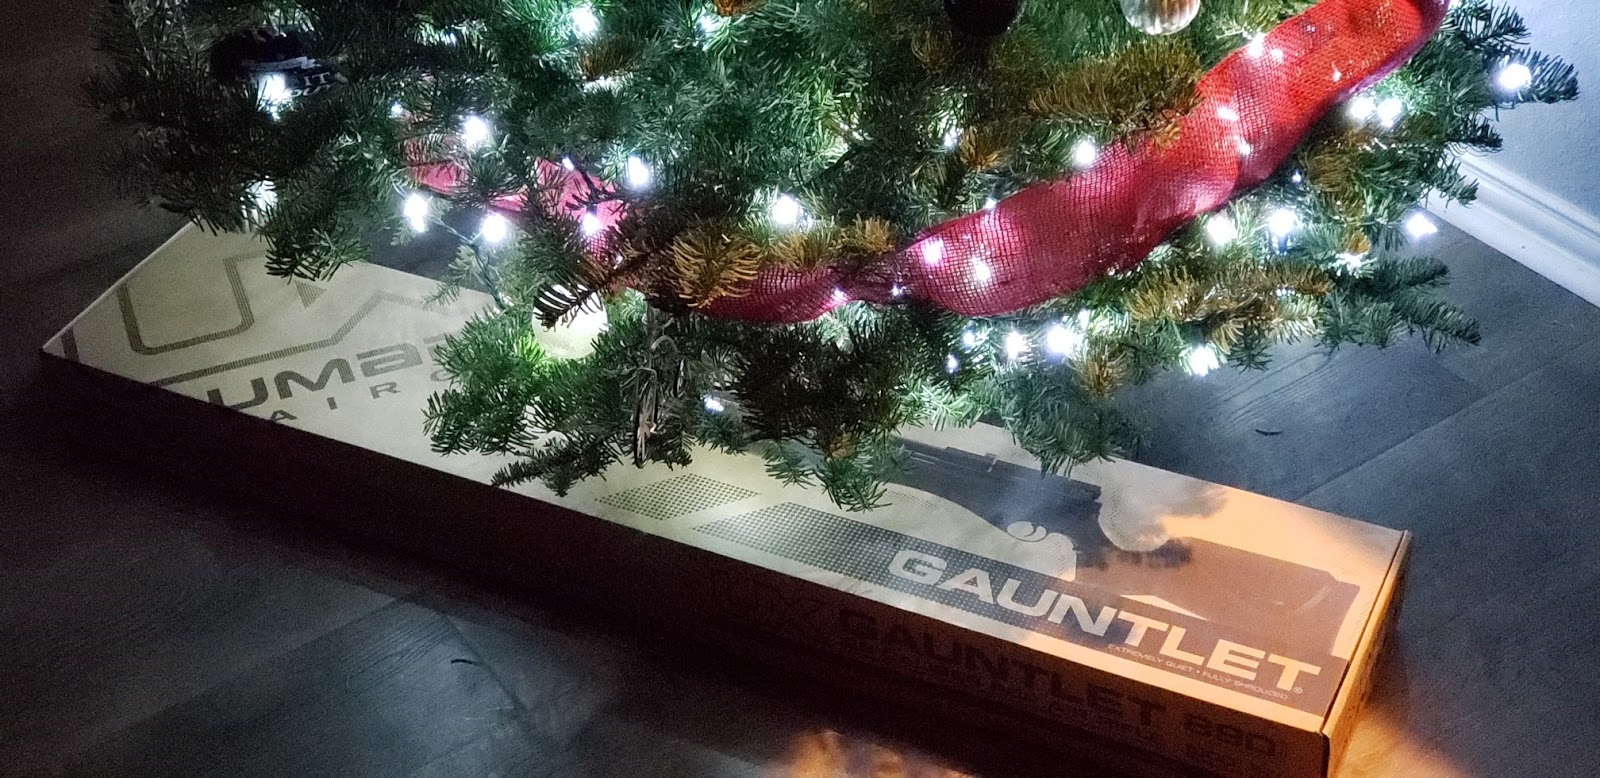 Umarex Gauntlet under the Christmas Tree